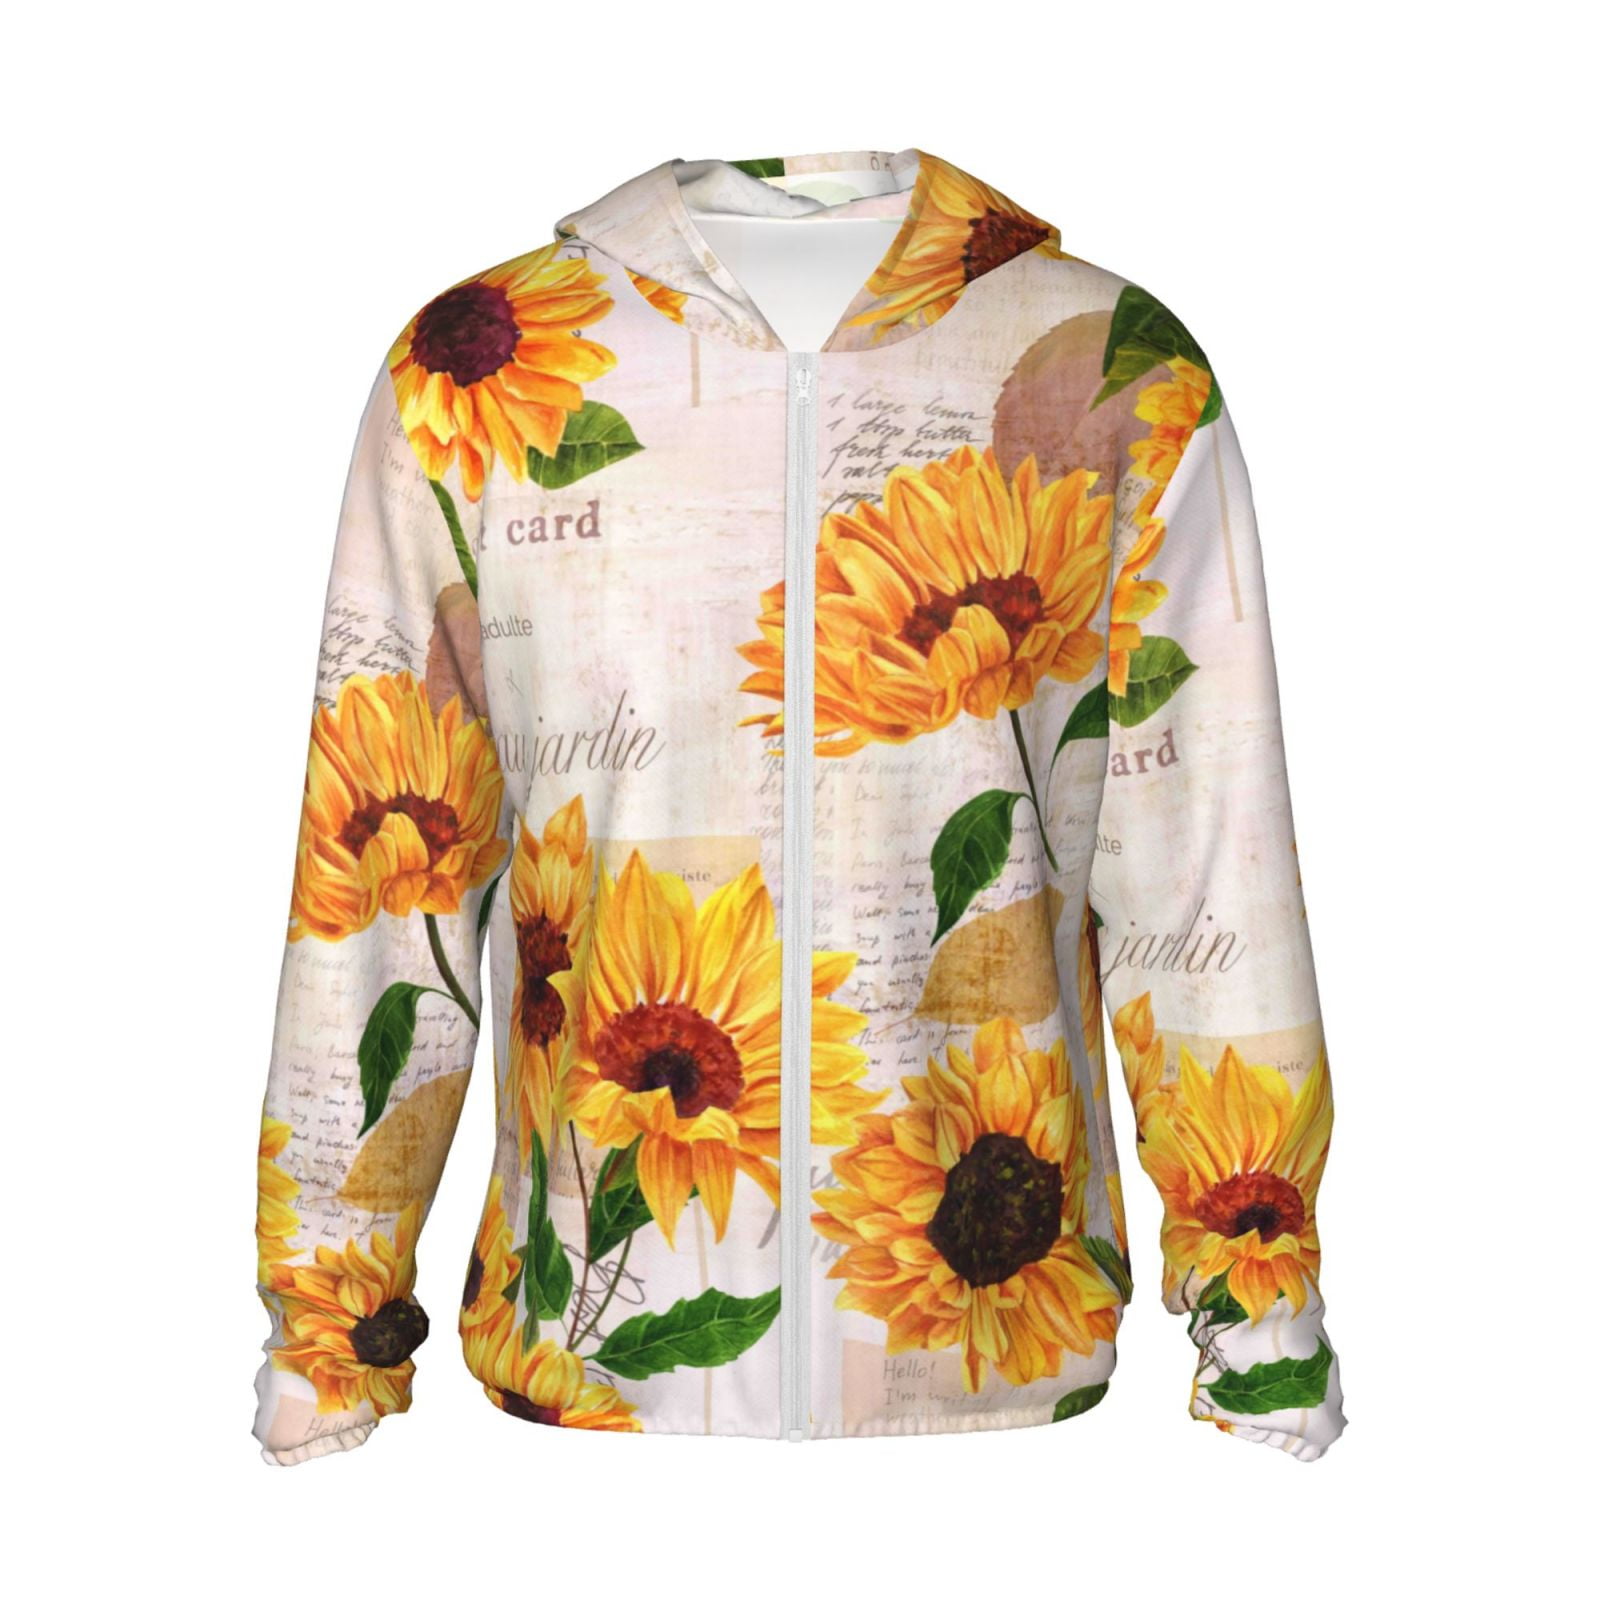 Haiem Sunflower 5 UPF 50+ Fishing Shirts for Men Long Sleeve UV Sun ...